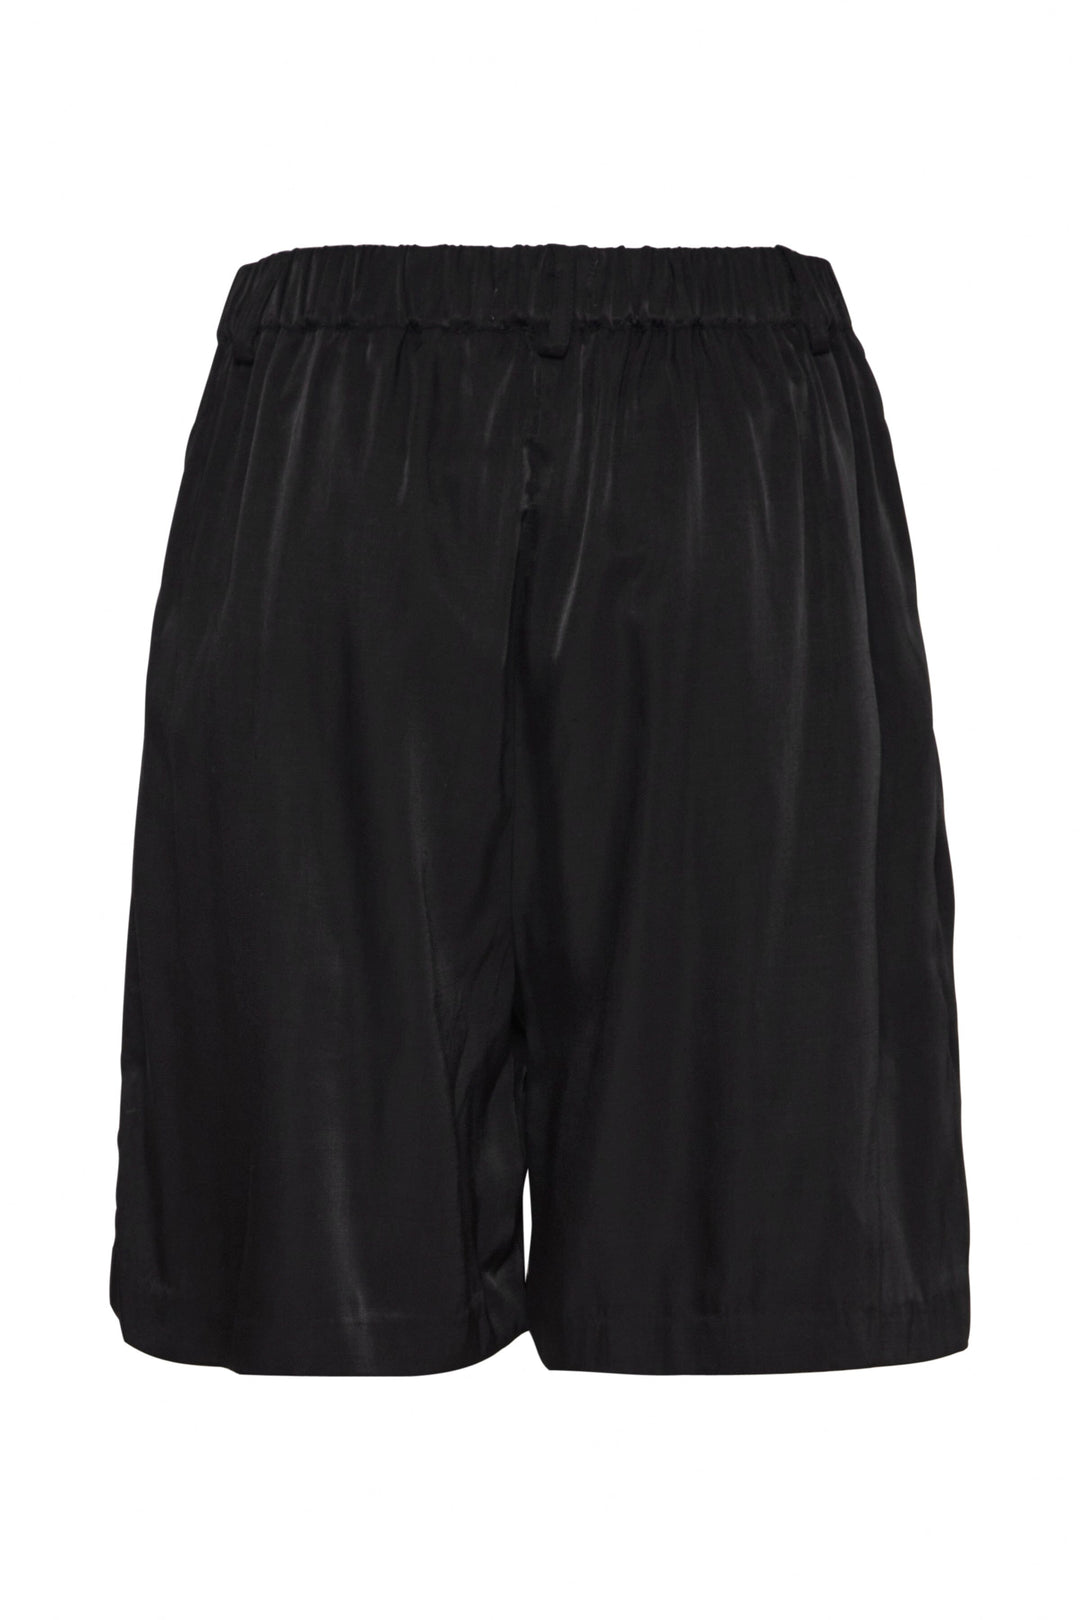 Ichi - Ihtutta Sho2 - 194008 Black Shorts 